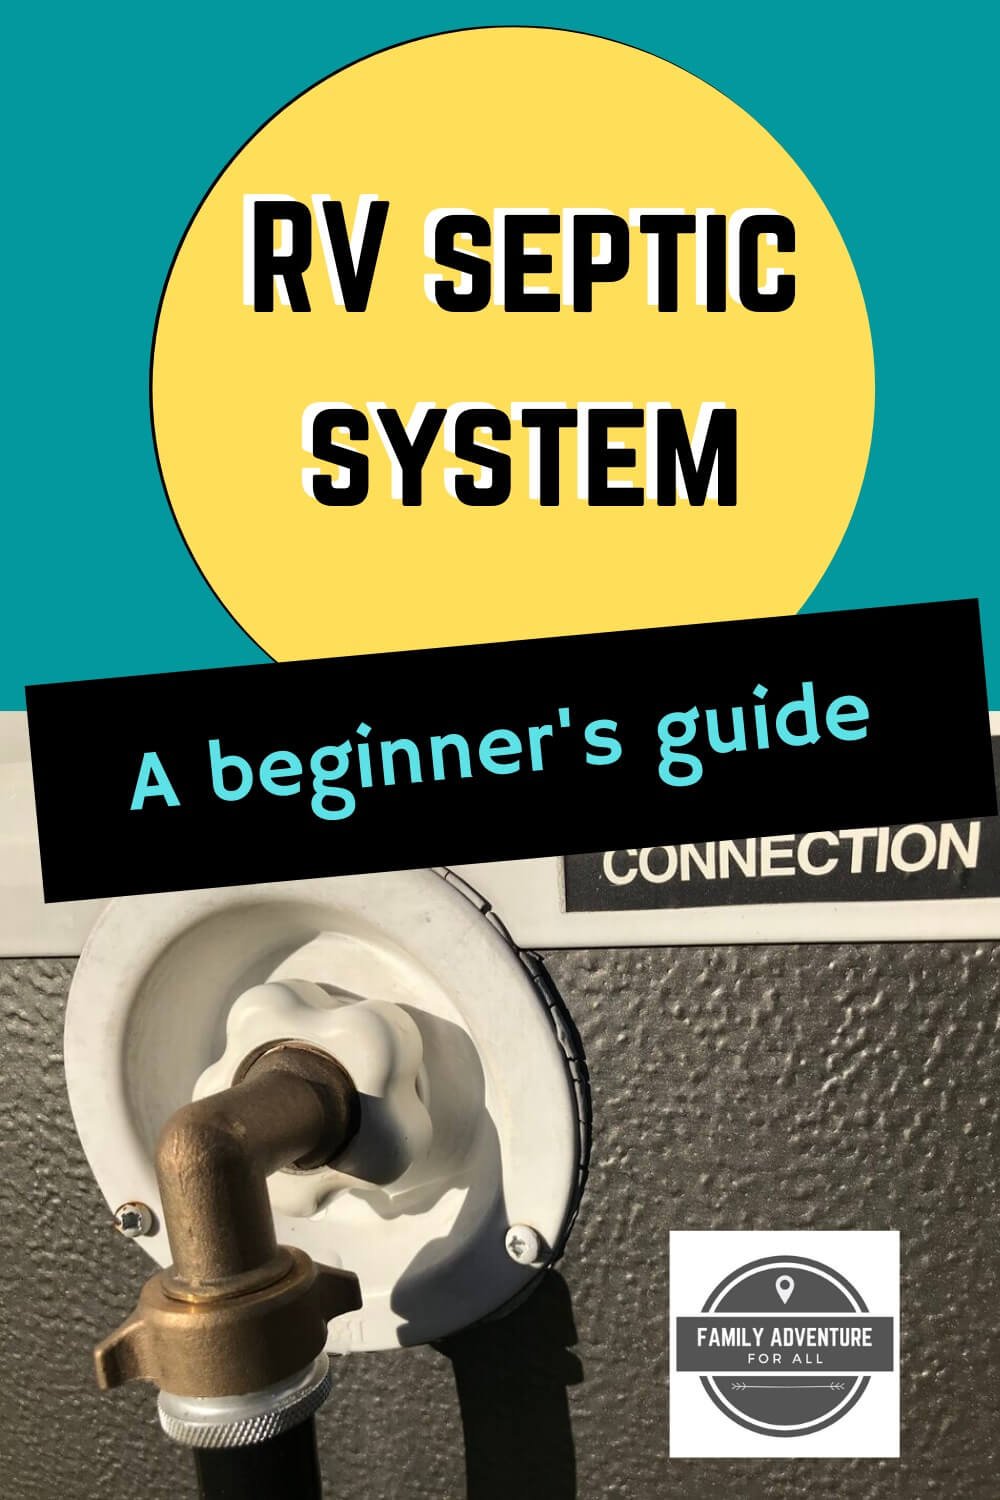 Rv septic system